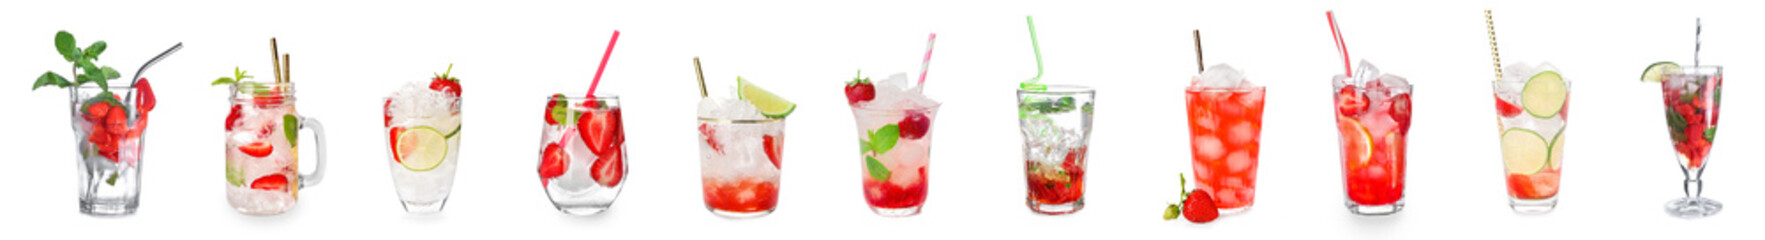 Set of fresh strawberry lemonades on white background - Powered by Adobe